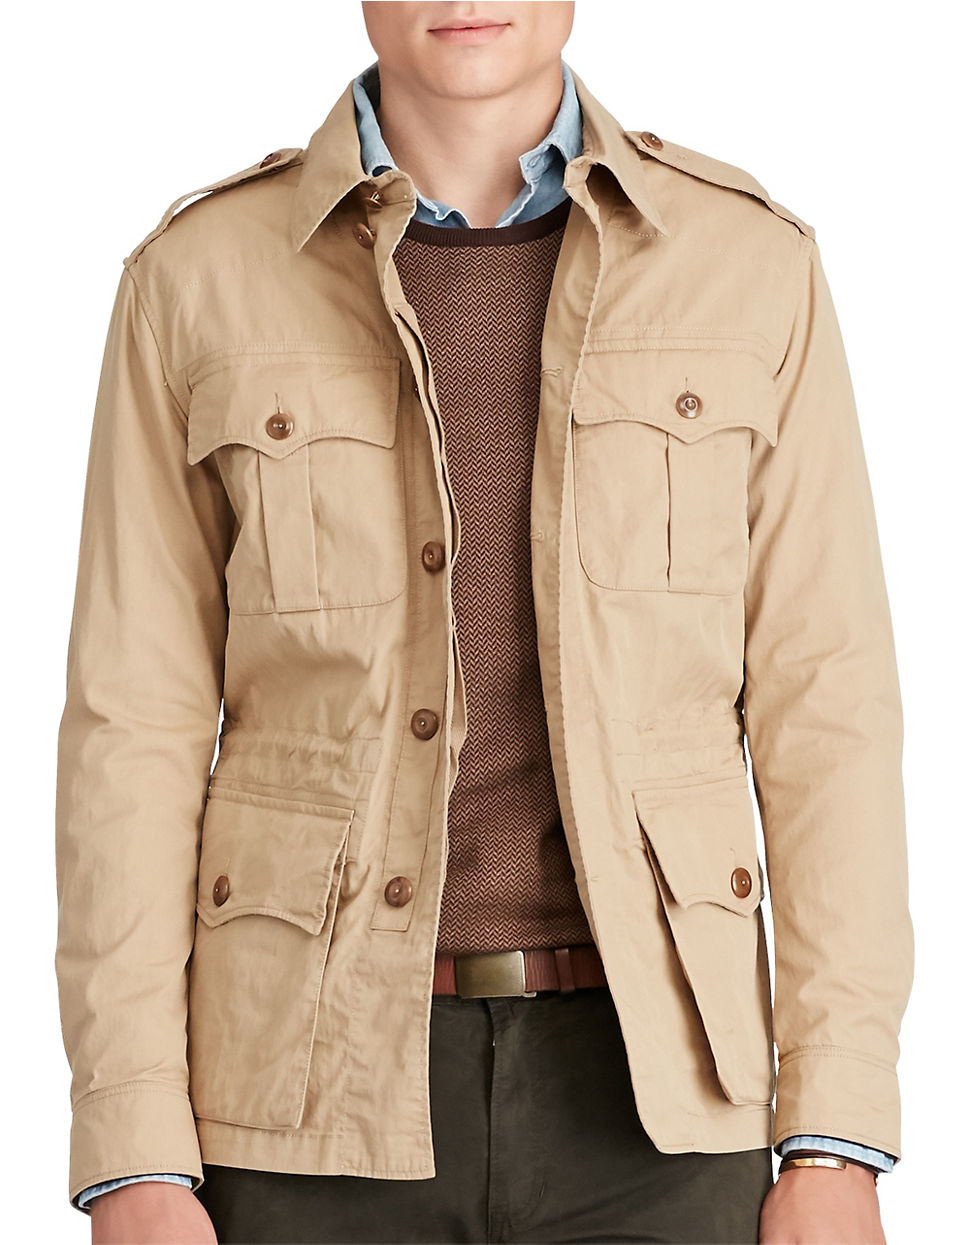 Polo ralph lauren Cotton-blend Safari Jacket in Natural for Men | Lyst